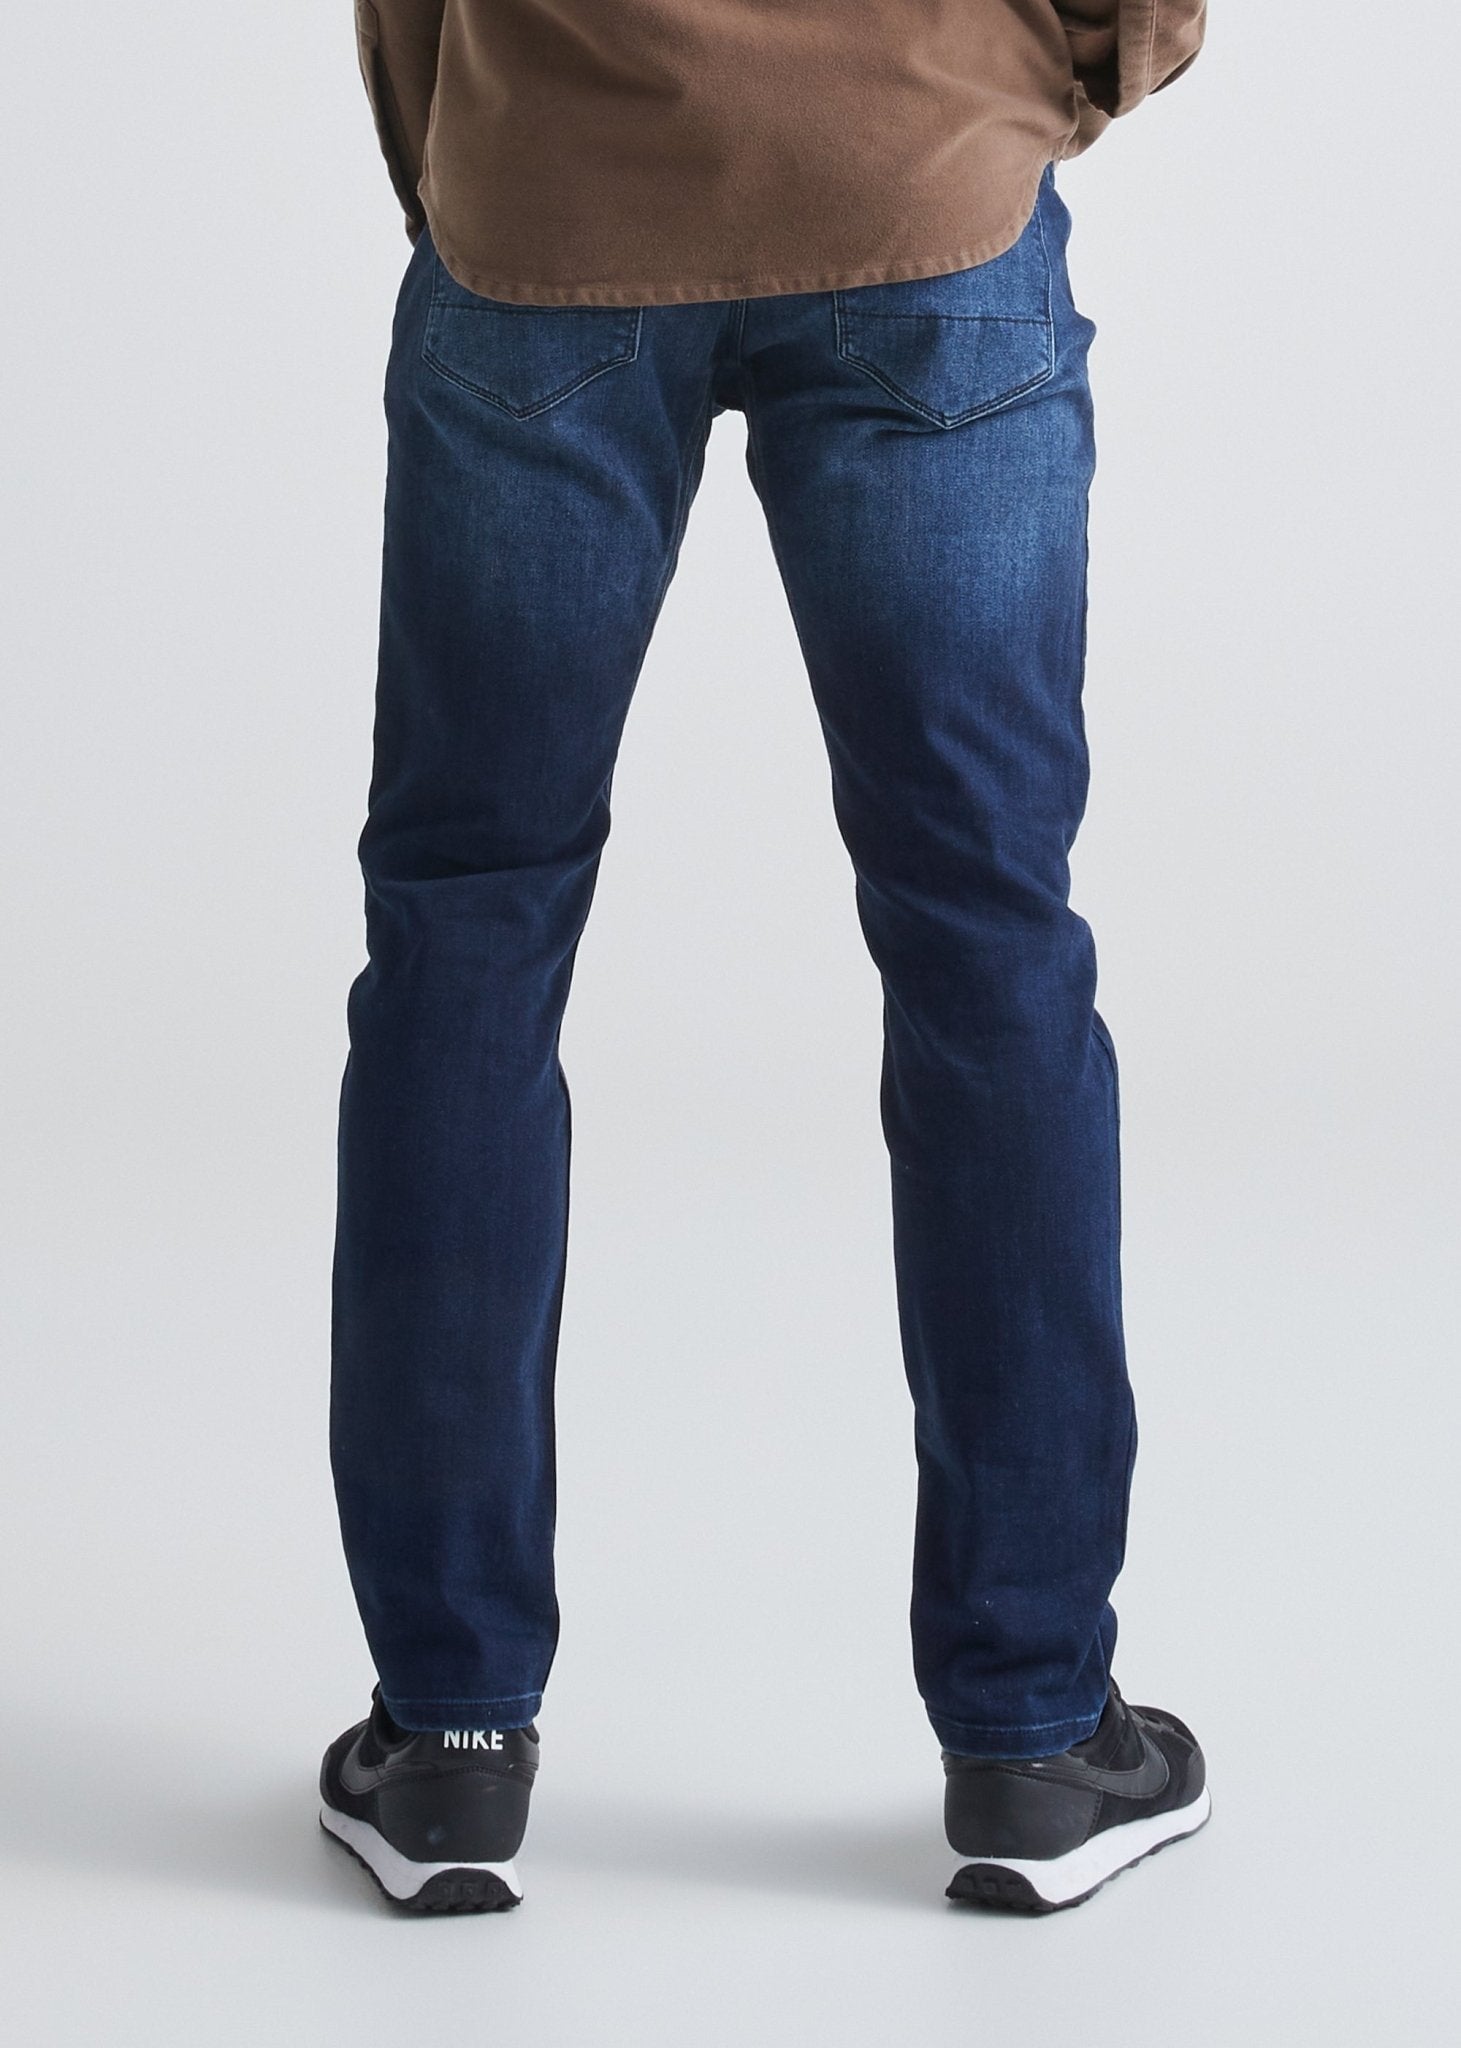 Men\'s Water Stretch Resistant Jeans Fit Slim